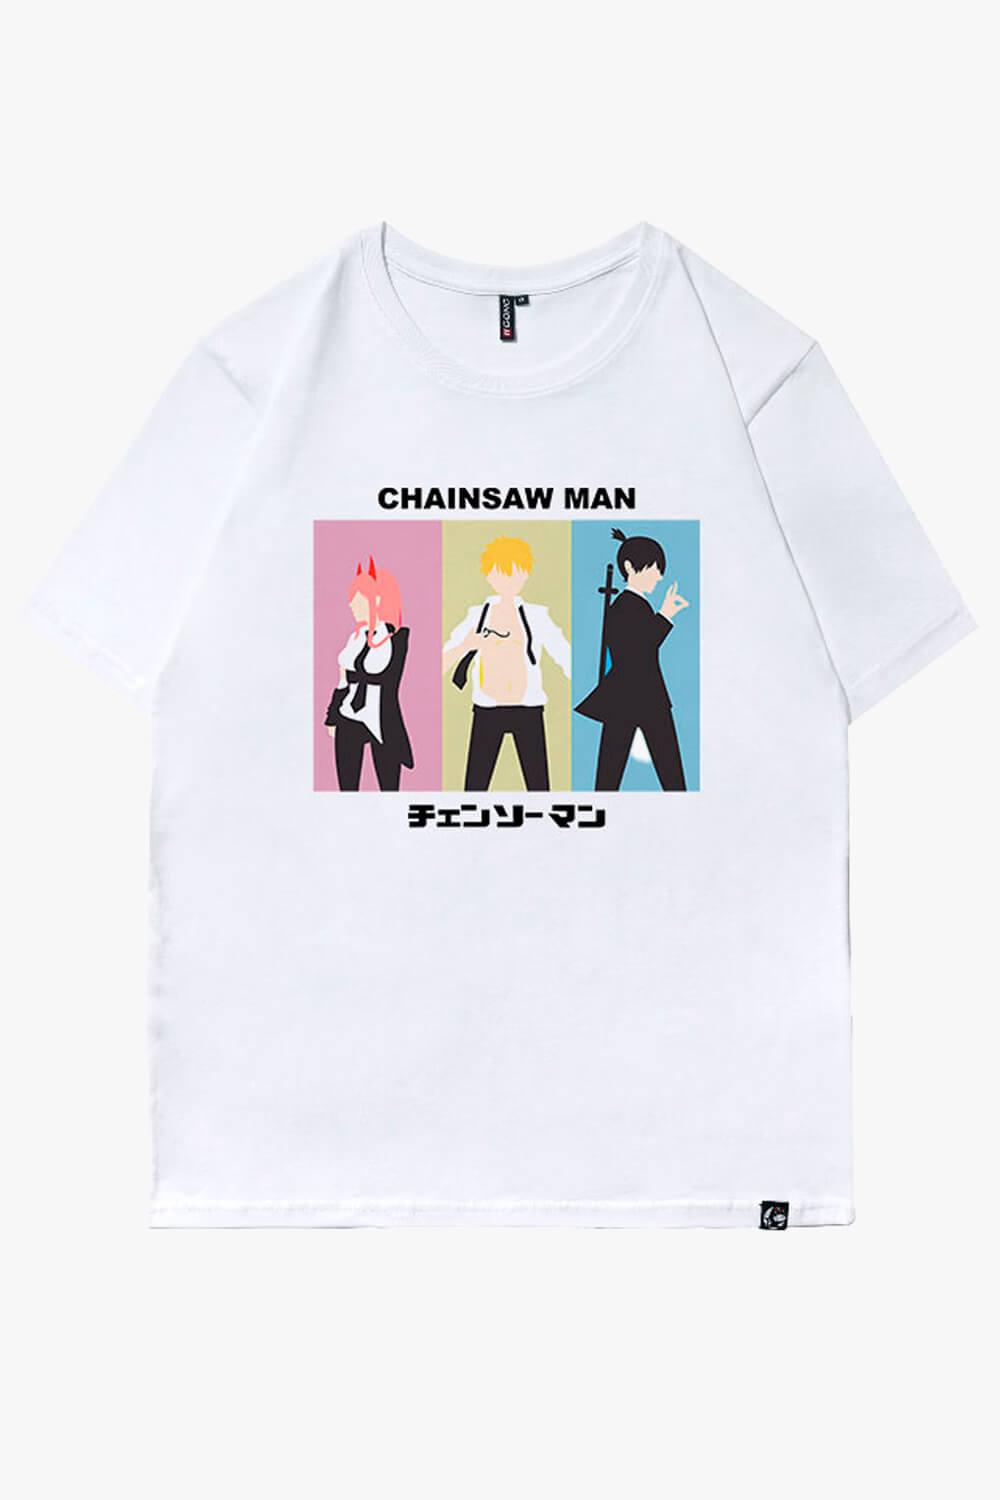 Chainsaw Man Minimalism Art T-Shirt - Aesthetic Clothes Shop